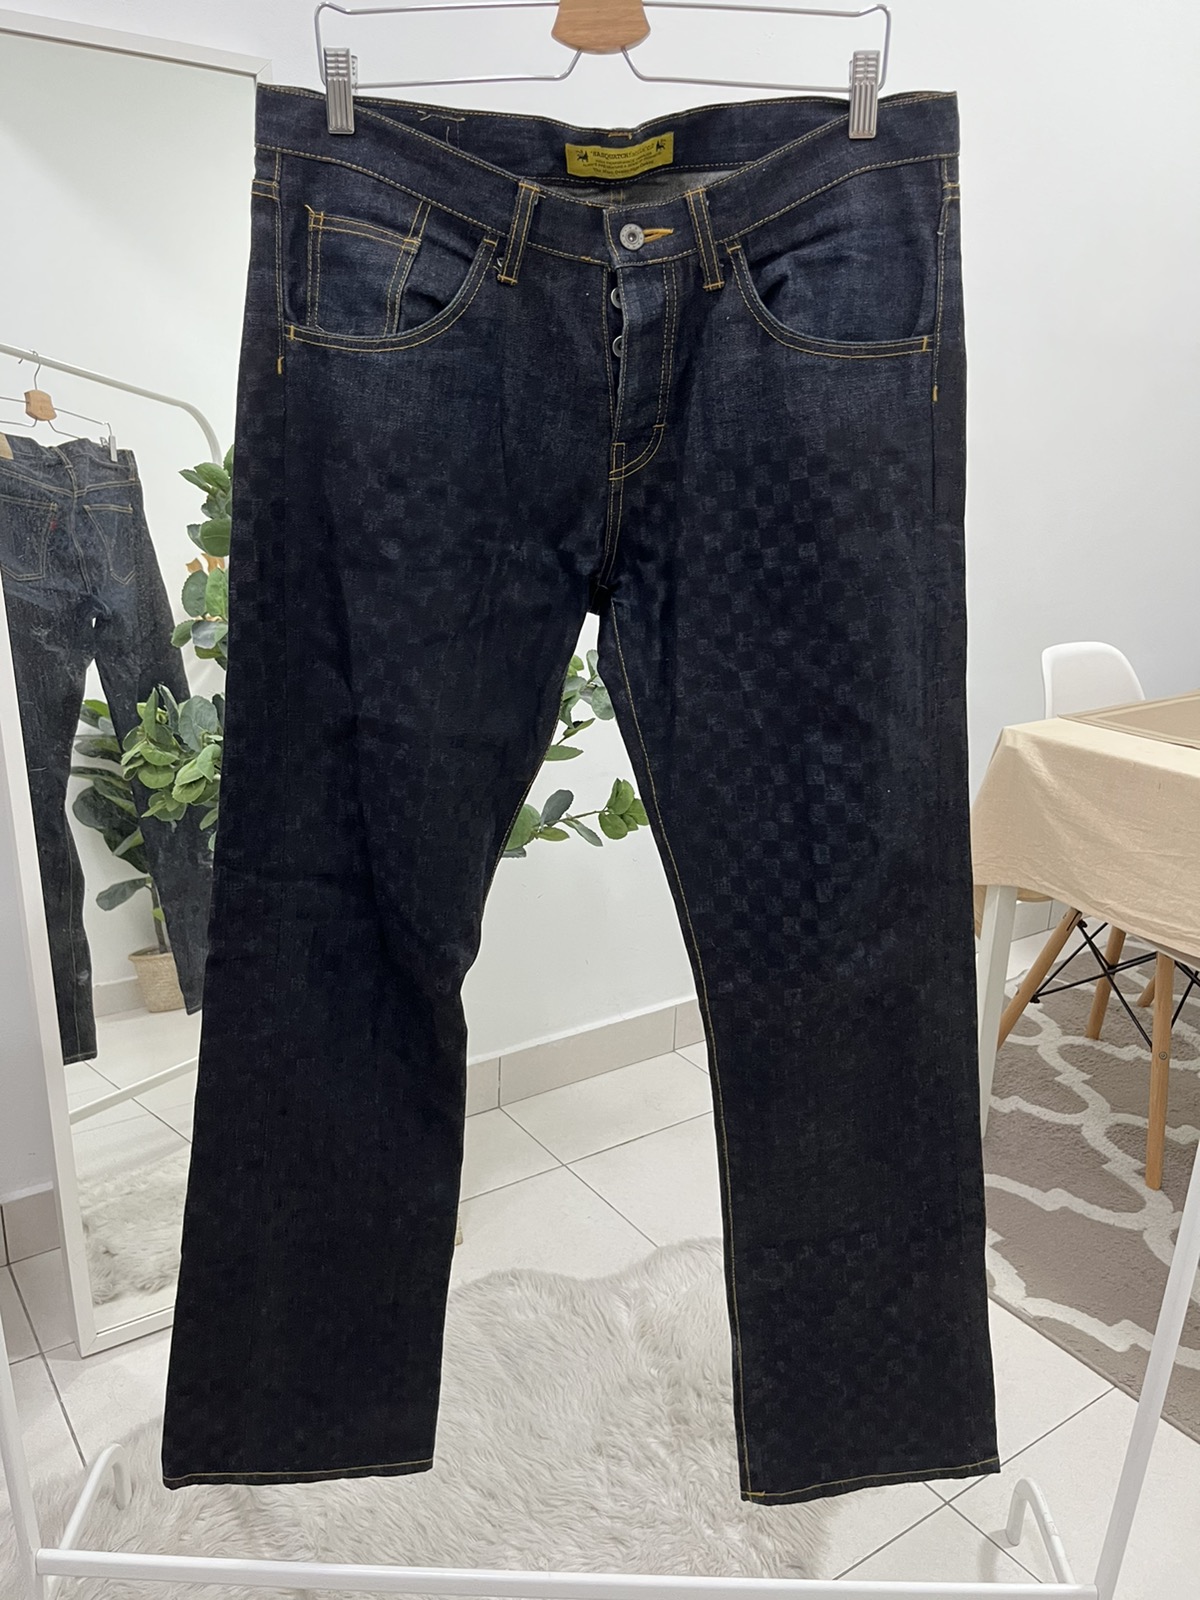 Rare Sasquatchfabrix Pattern Jeans - 1